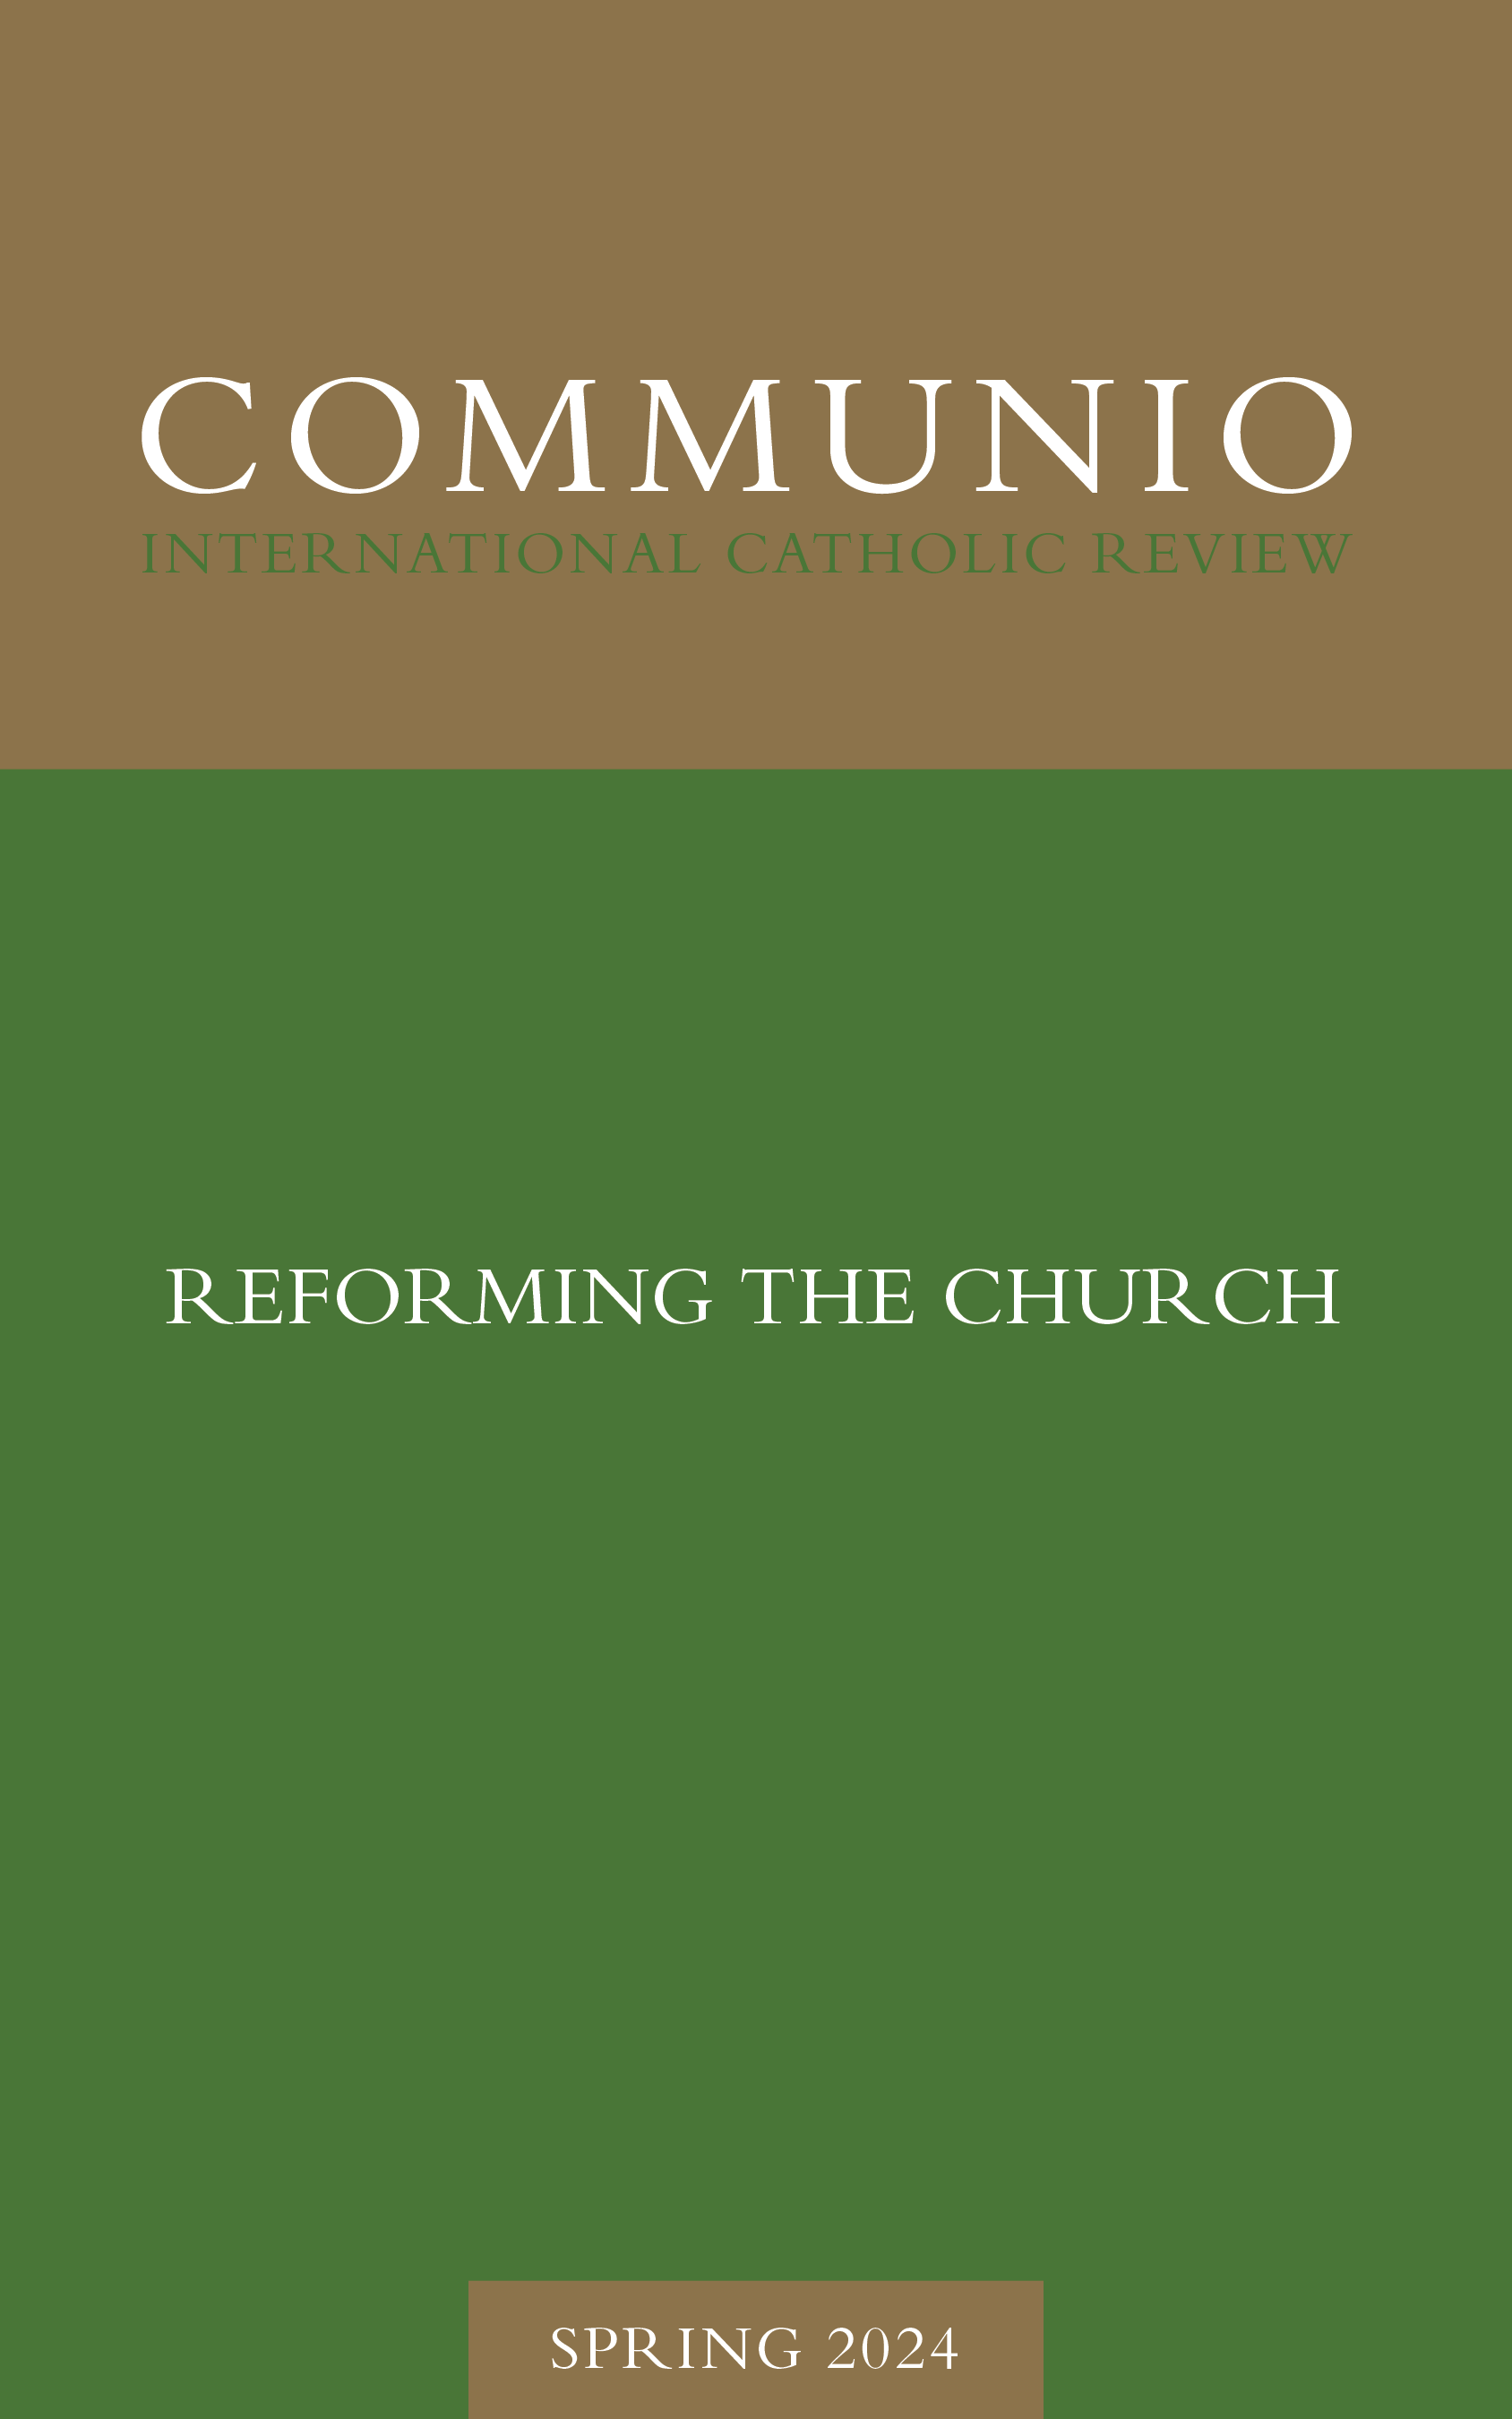 Communio - Spring 2024 - Reforming the Church